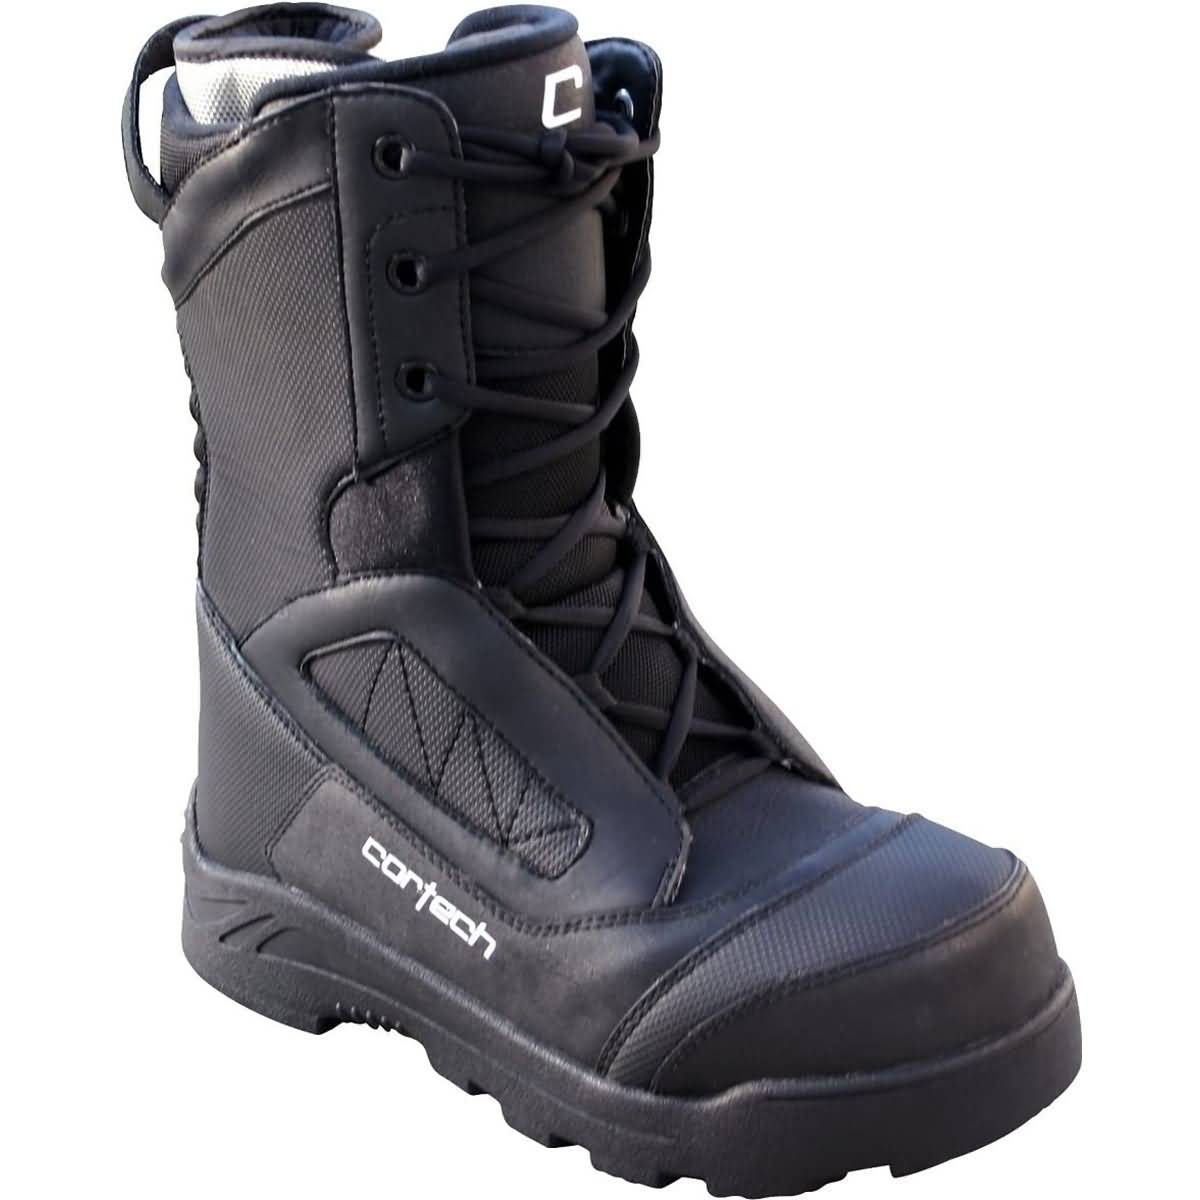 Cortech Cascade Men's Snow Boots-8510